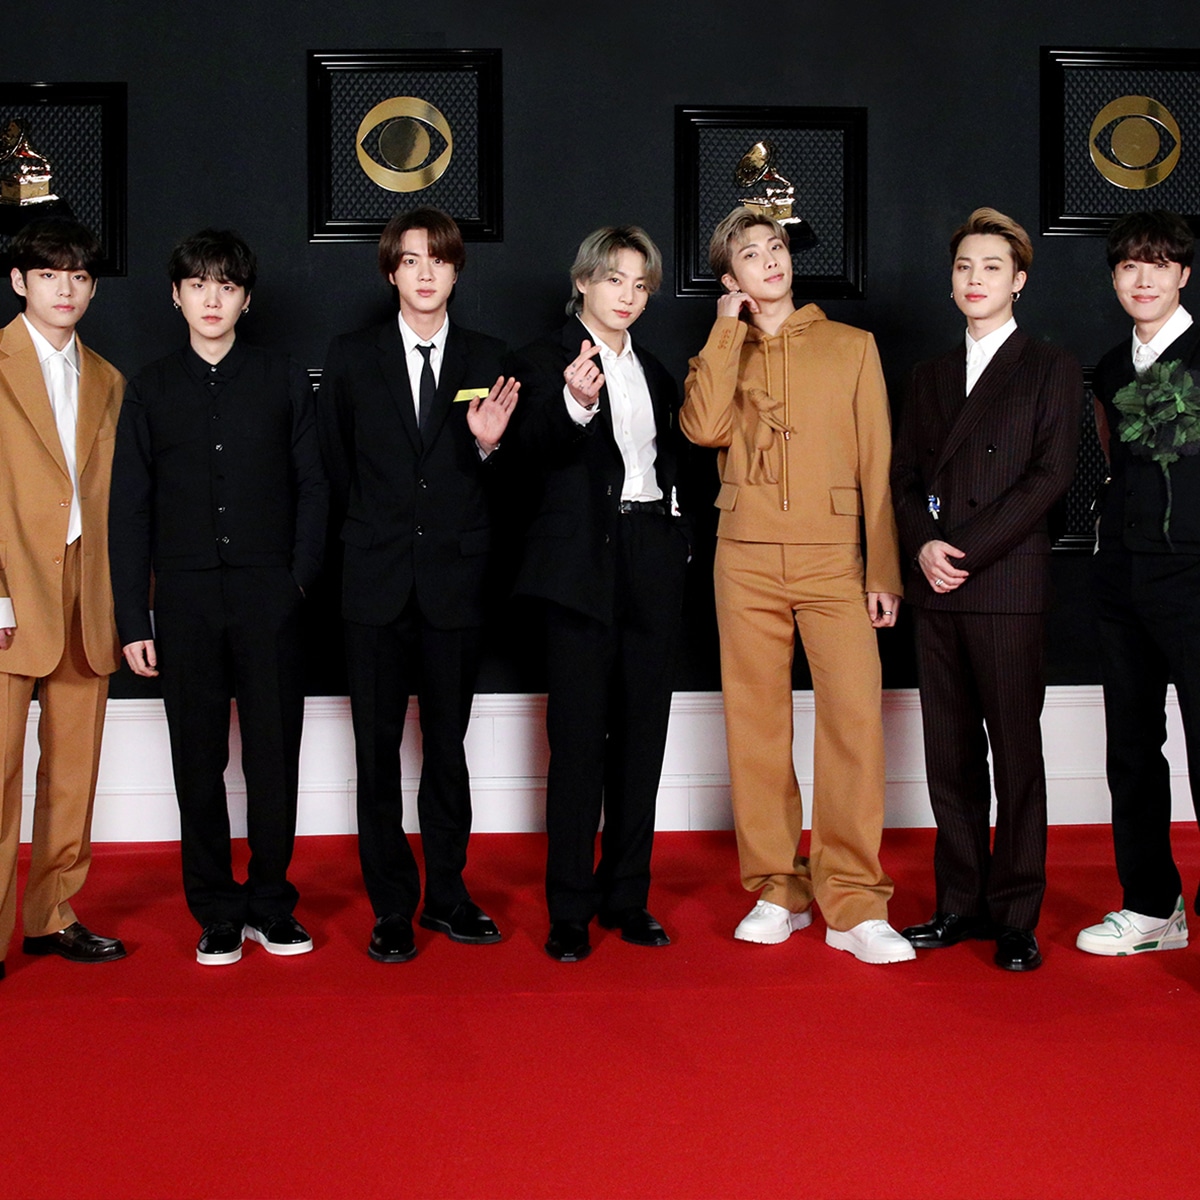 BTS, 2021 Grammy Awards, Red Carpet Fashion